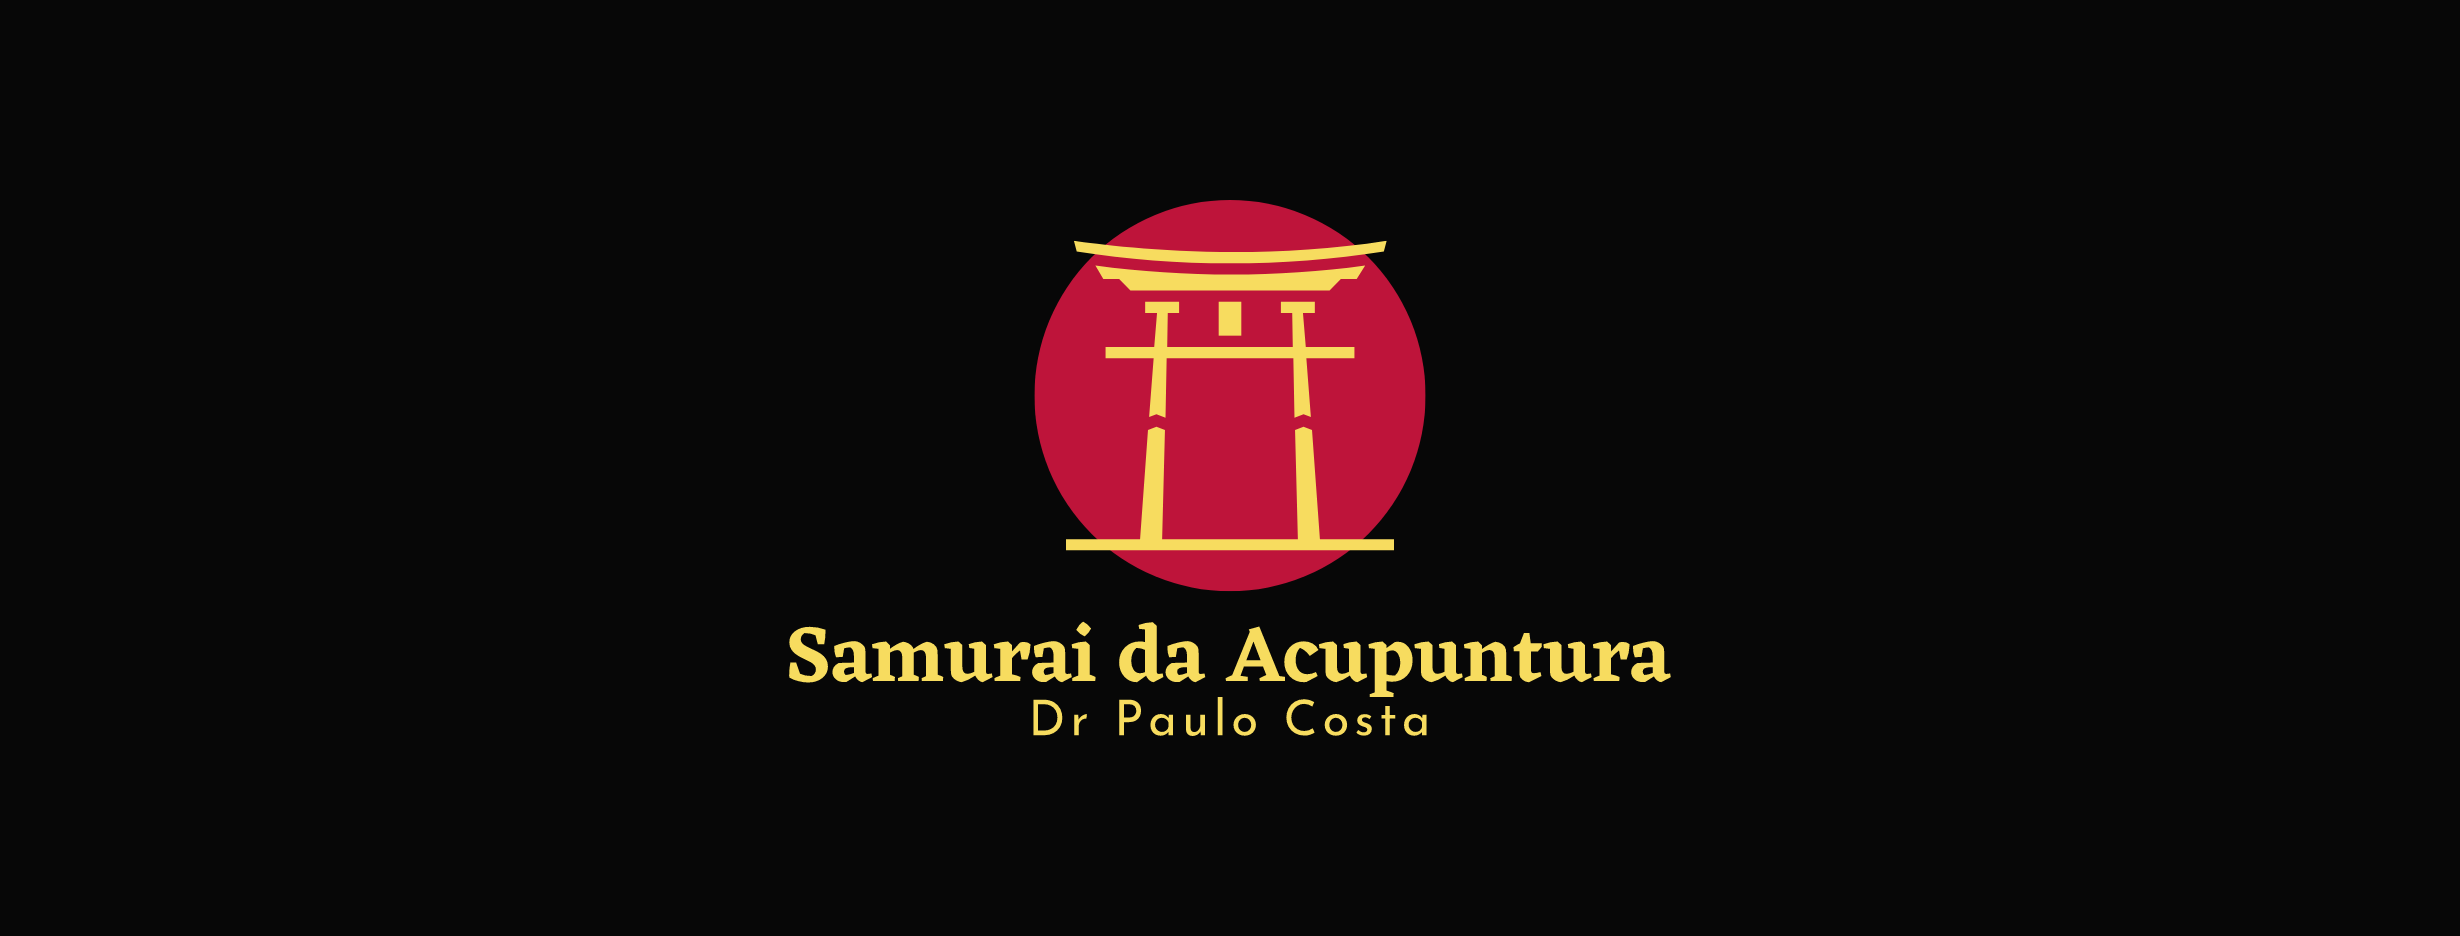 Samurai da Acupuntura Logo